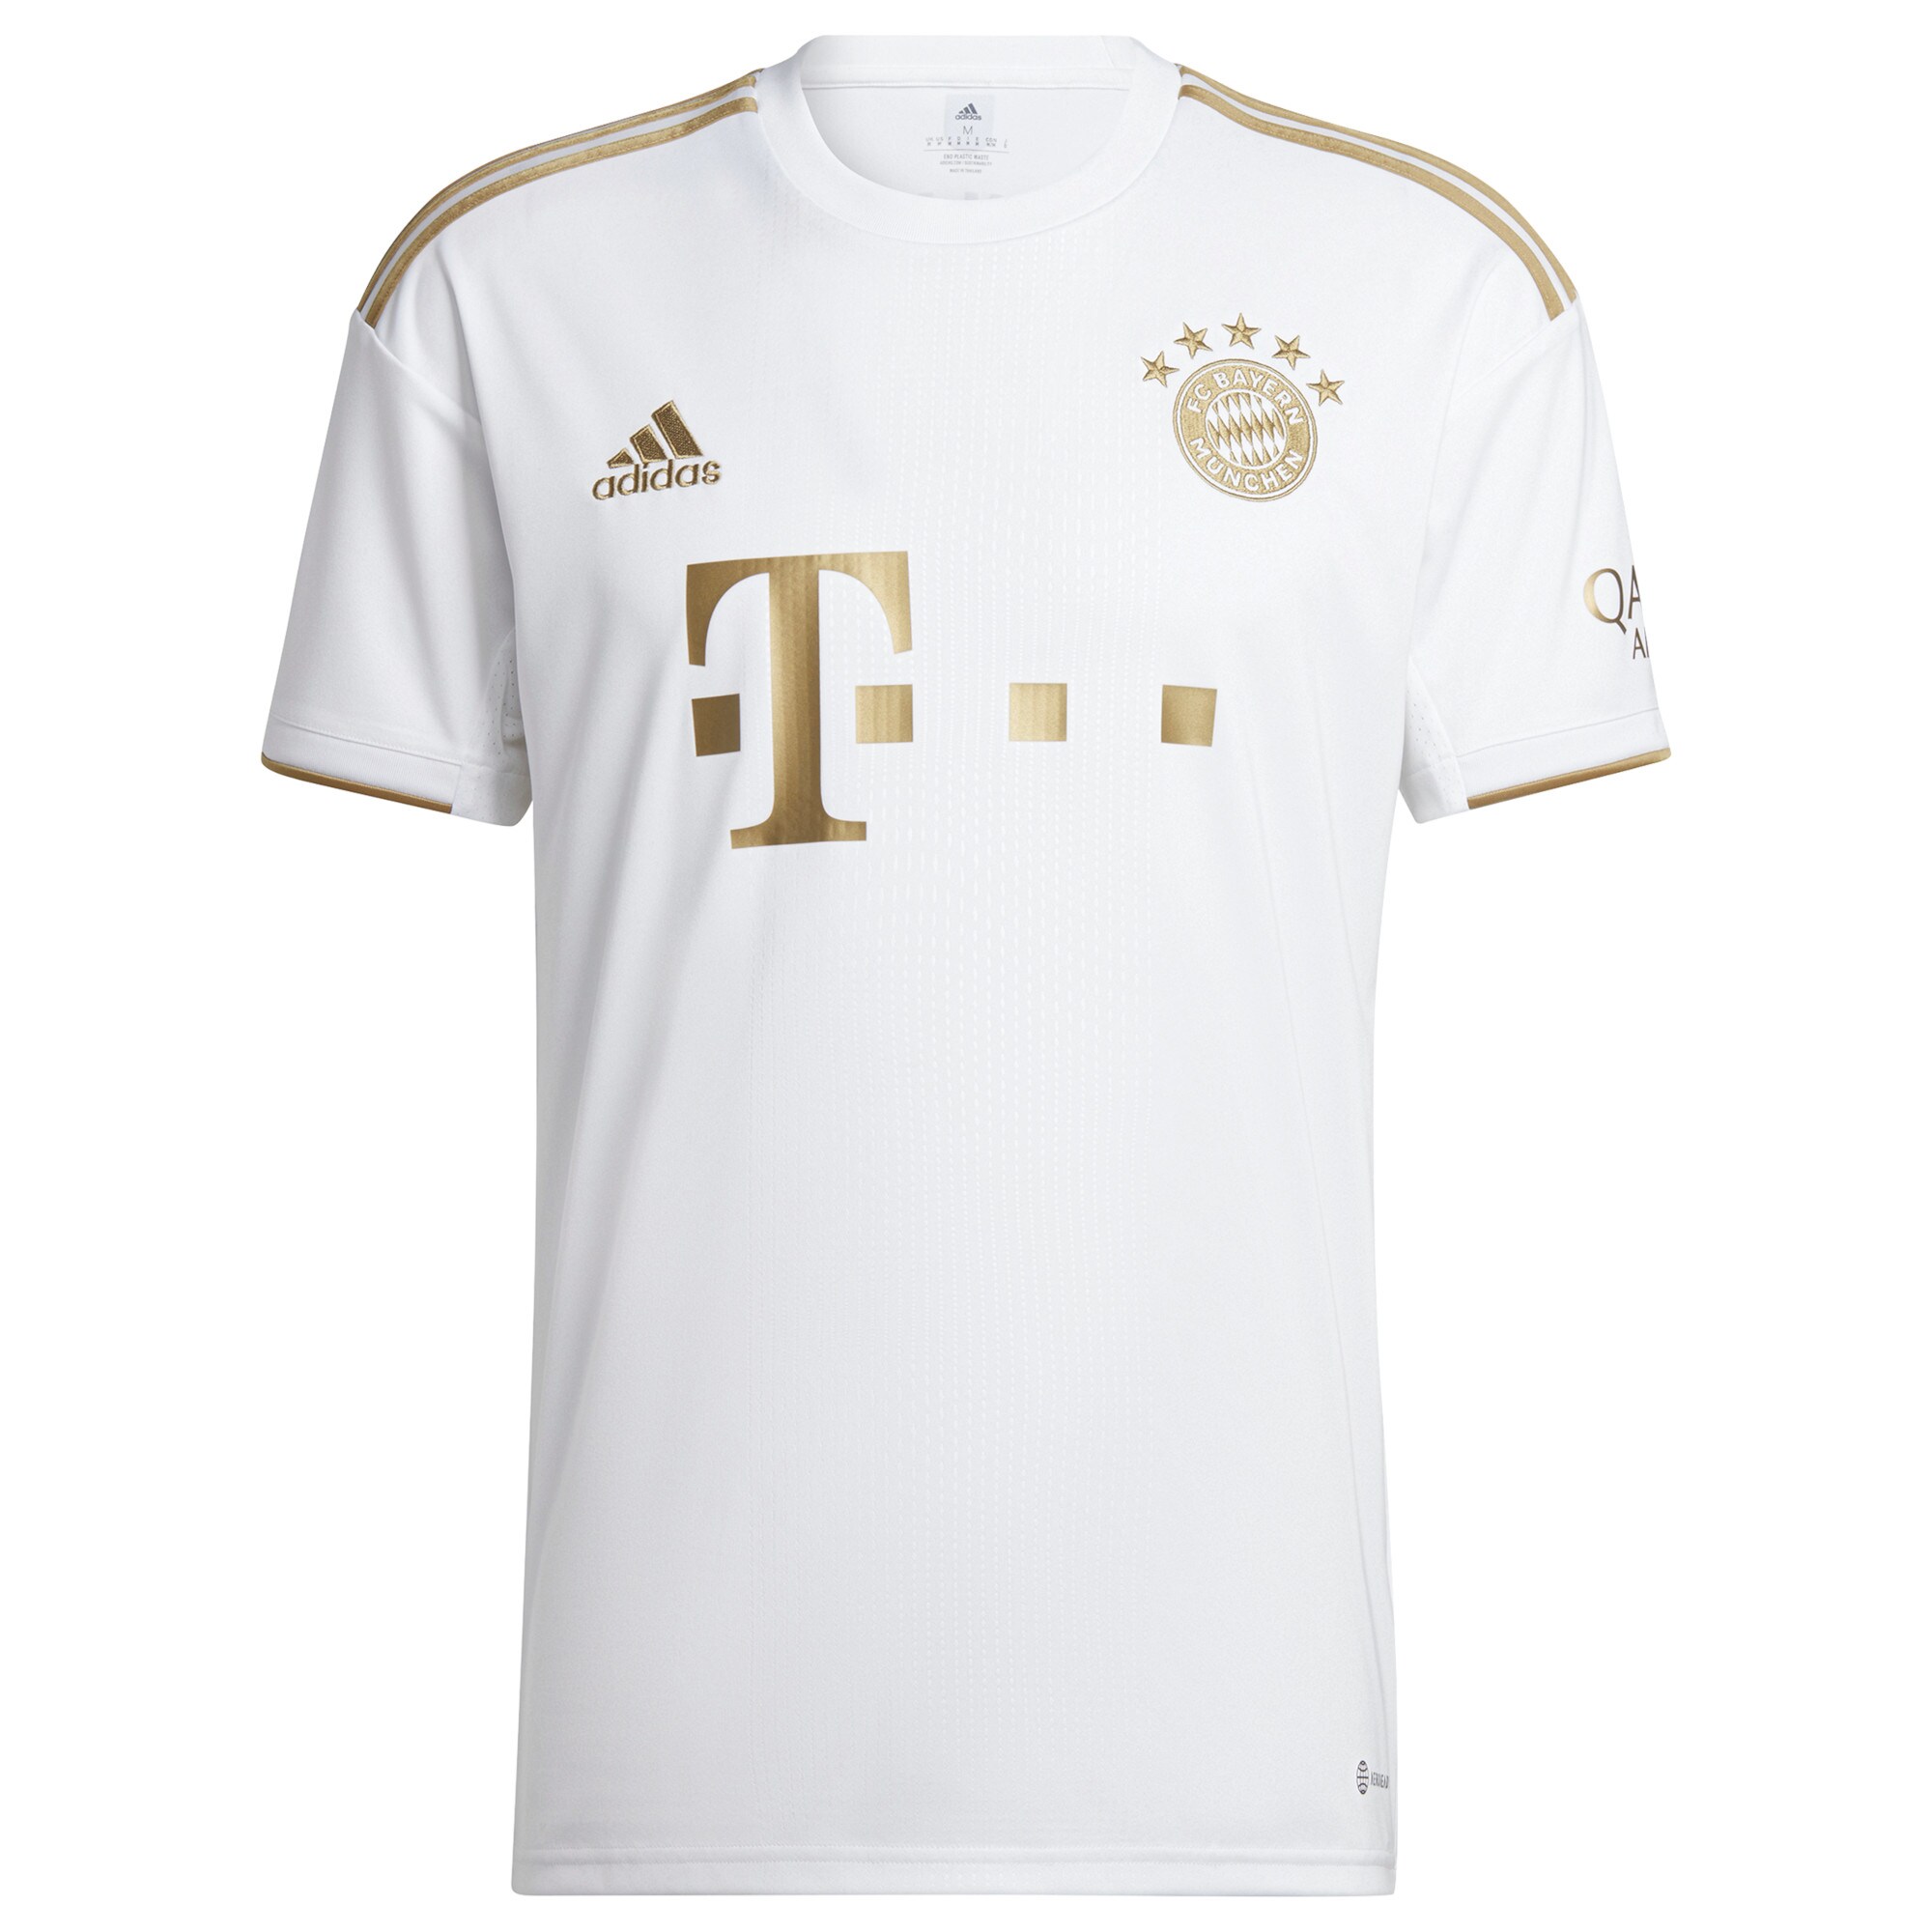 FC Bayern Away Shirt 2022-23 with João Cancelo 22 printing